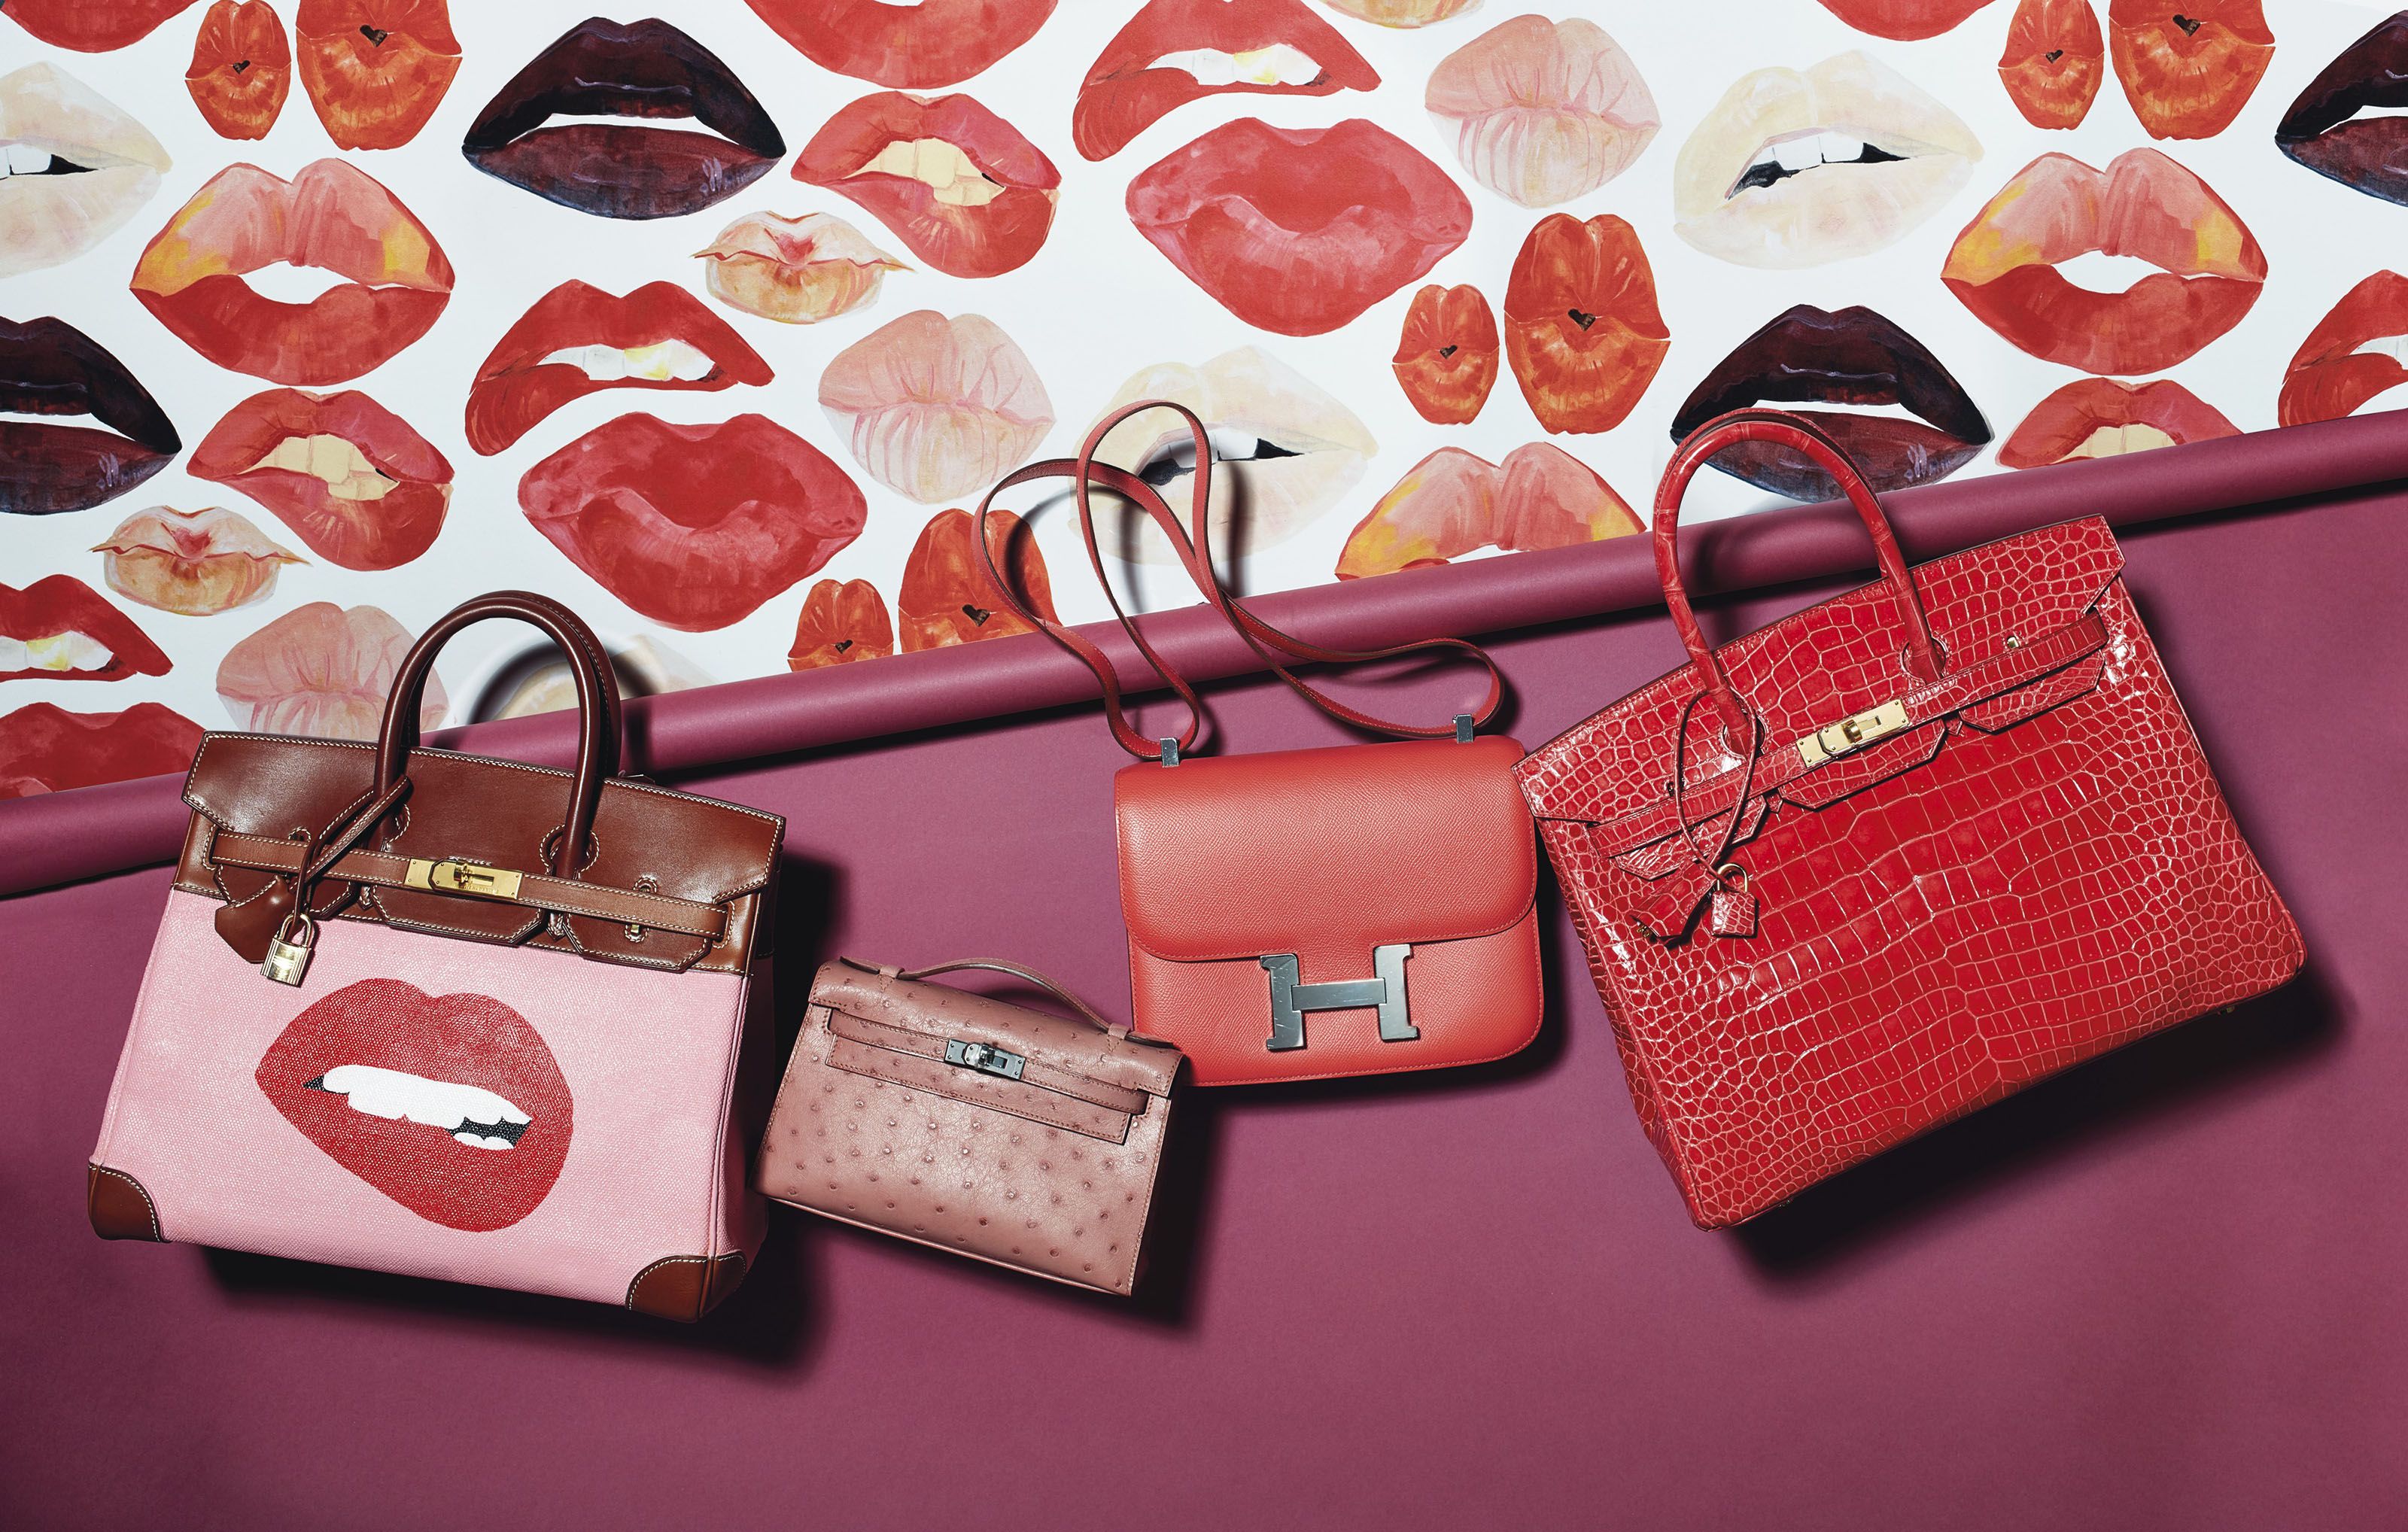 Hermès Birkin handbag sells for £162,500 at Christie's auction